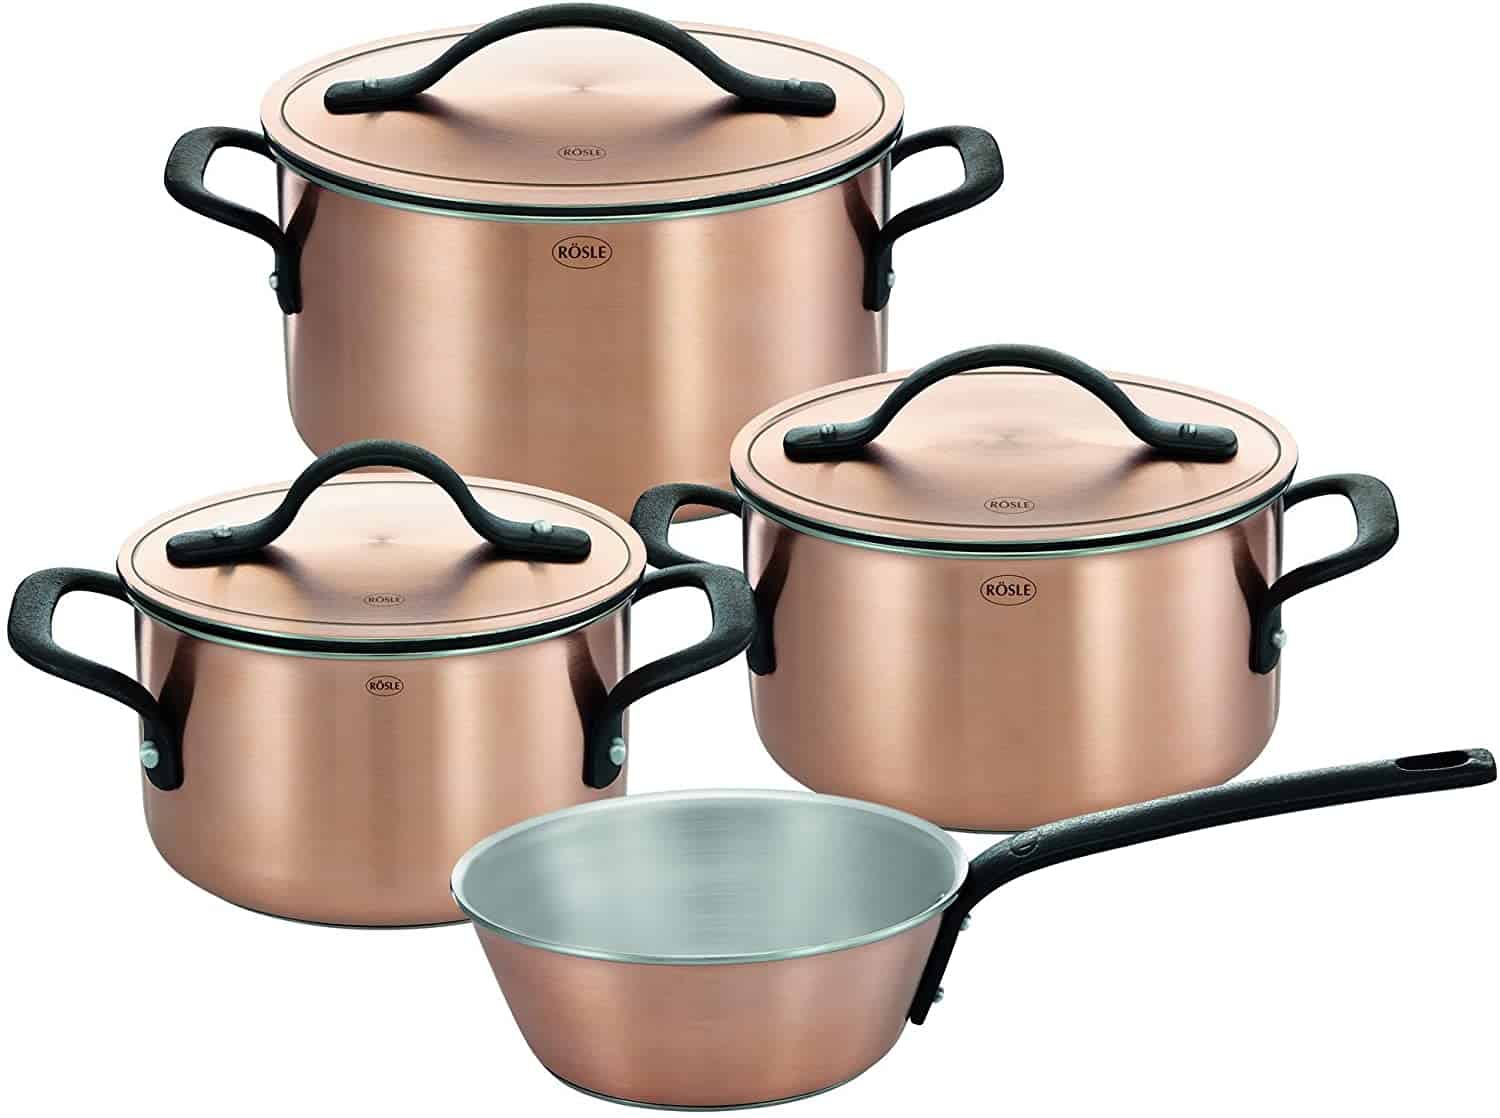 Best copper stock pot: Rössle Chalet